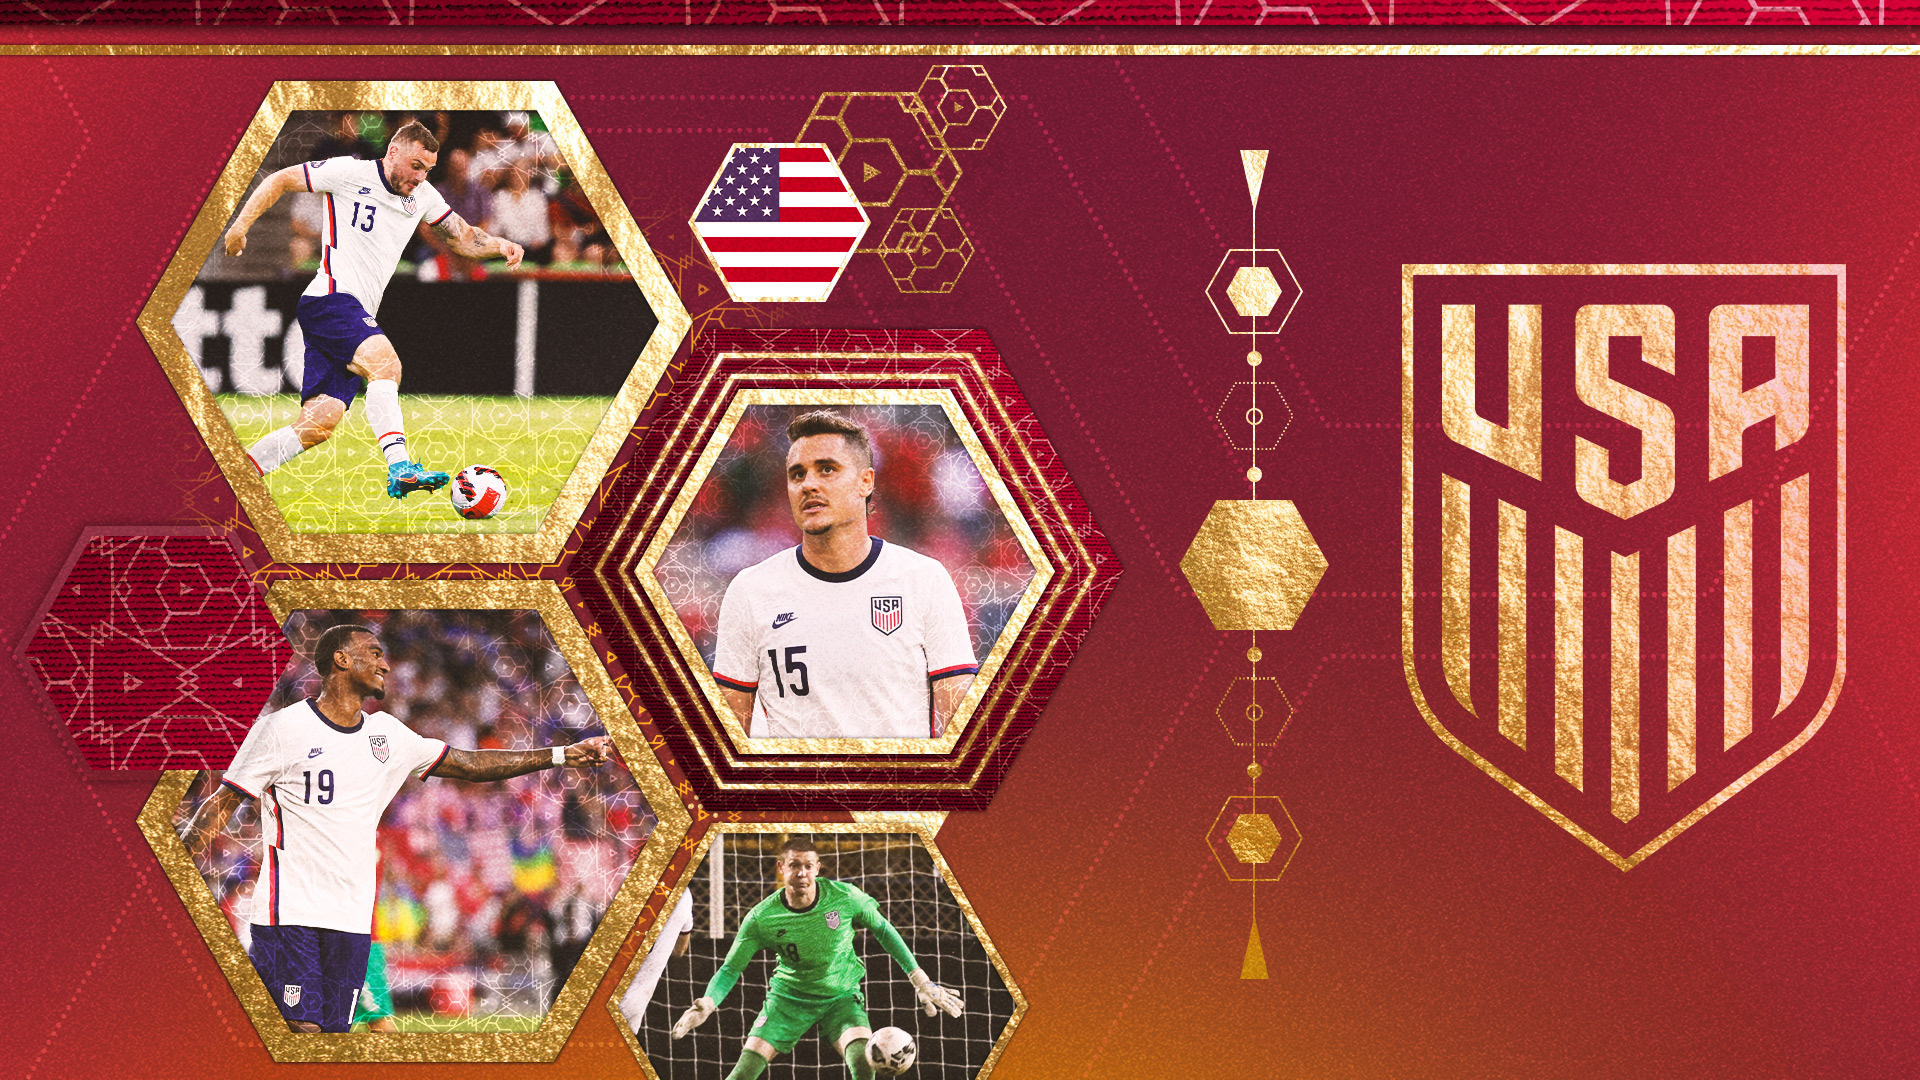 usa soccer logo 2022 wallpaper